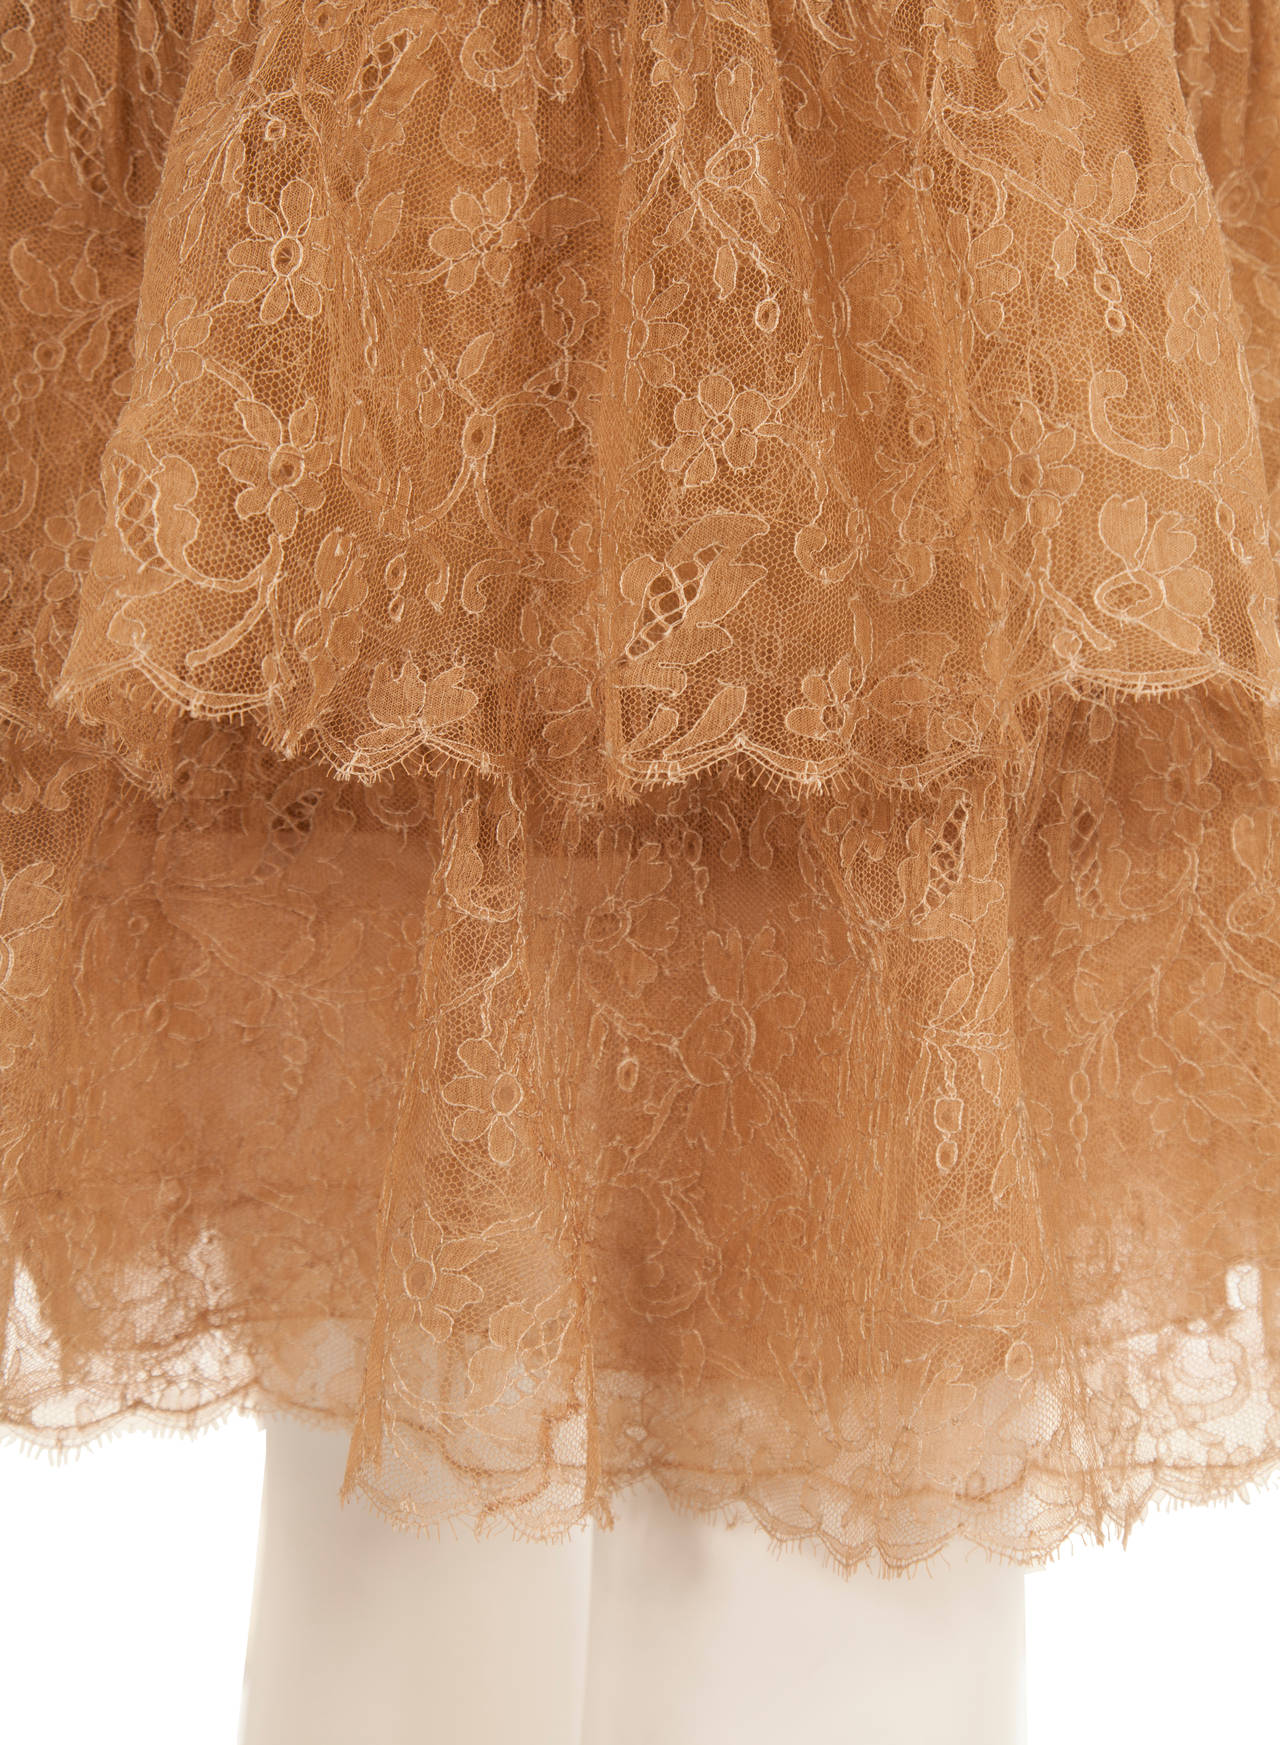 Balenciaga haute couture caramel lace dress, spring summer 1964 For Sale 1